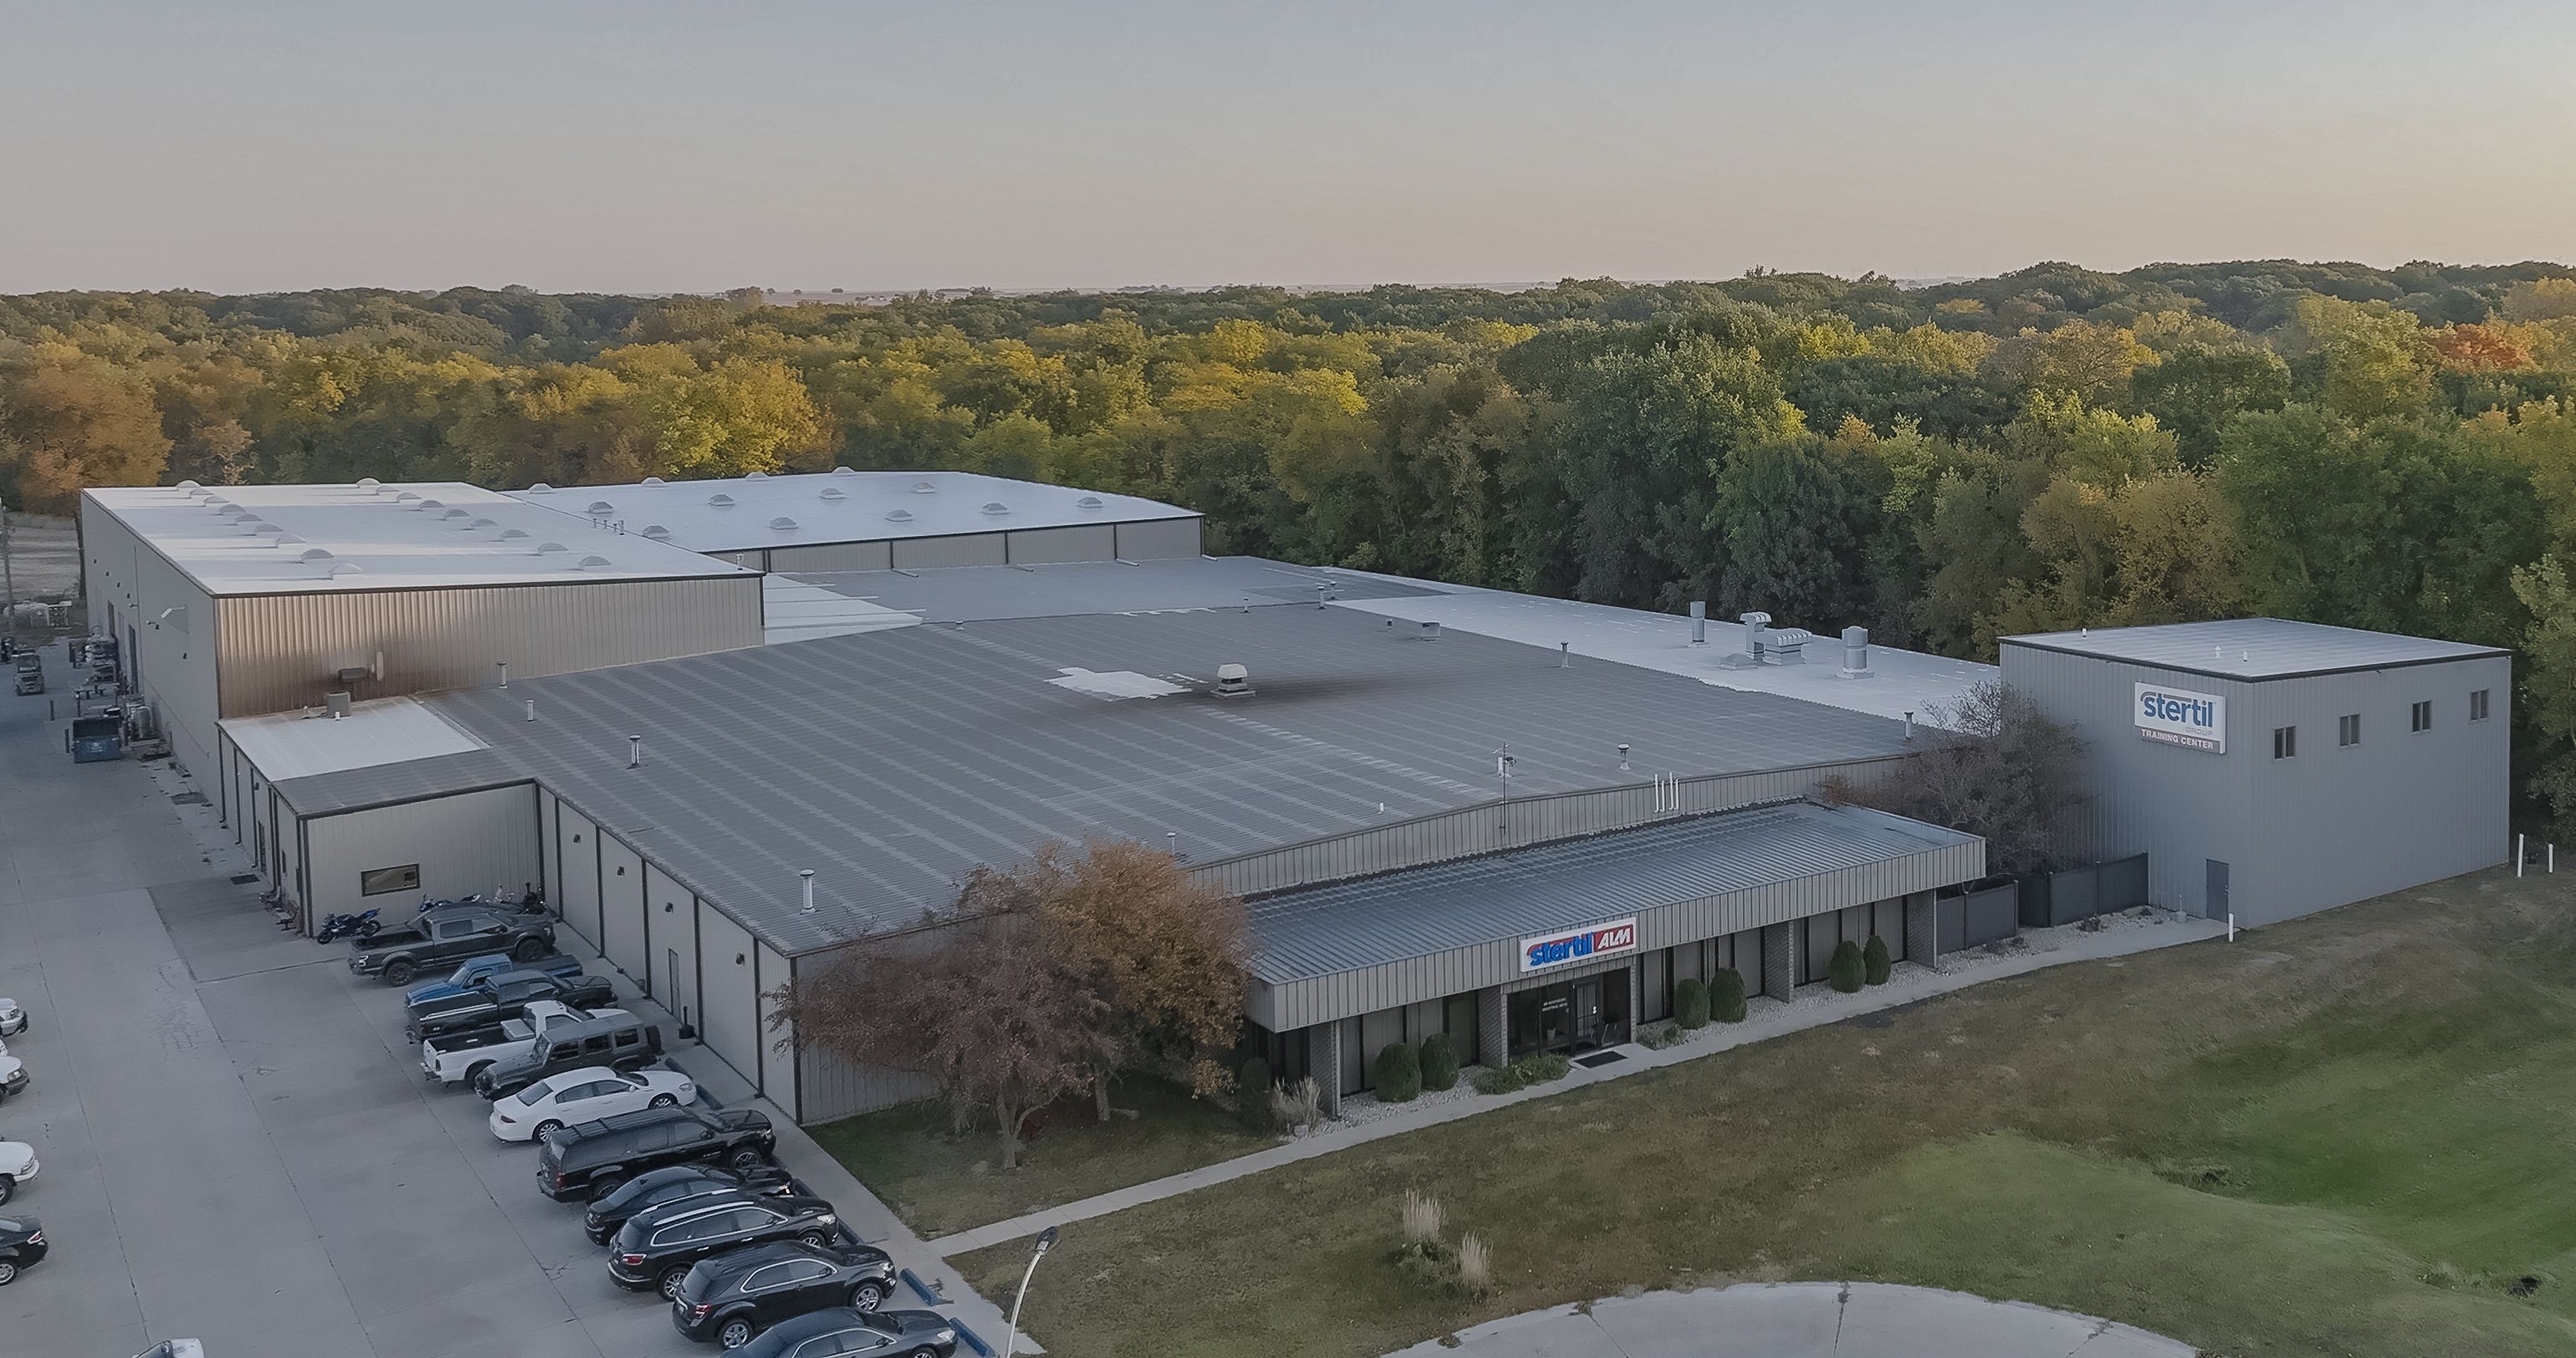 Stertil-Koni’s U.S. production facility, Stertil ALM, located in Streator, Illinois 